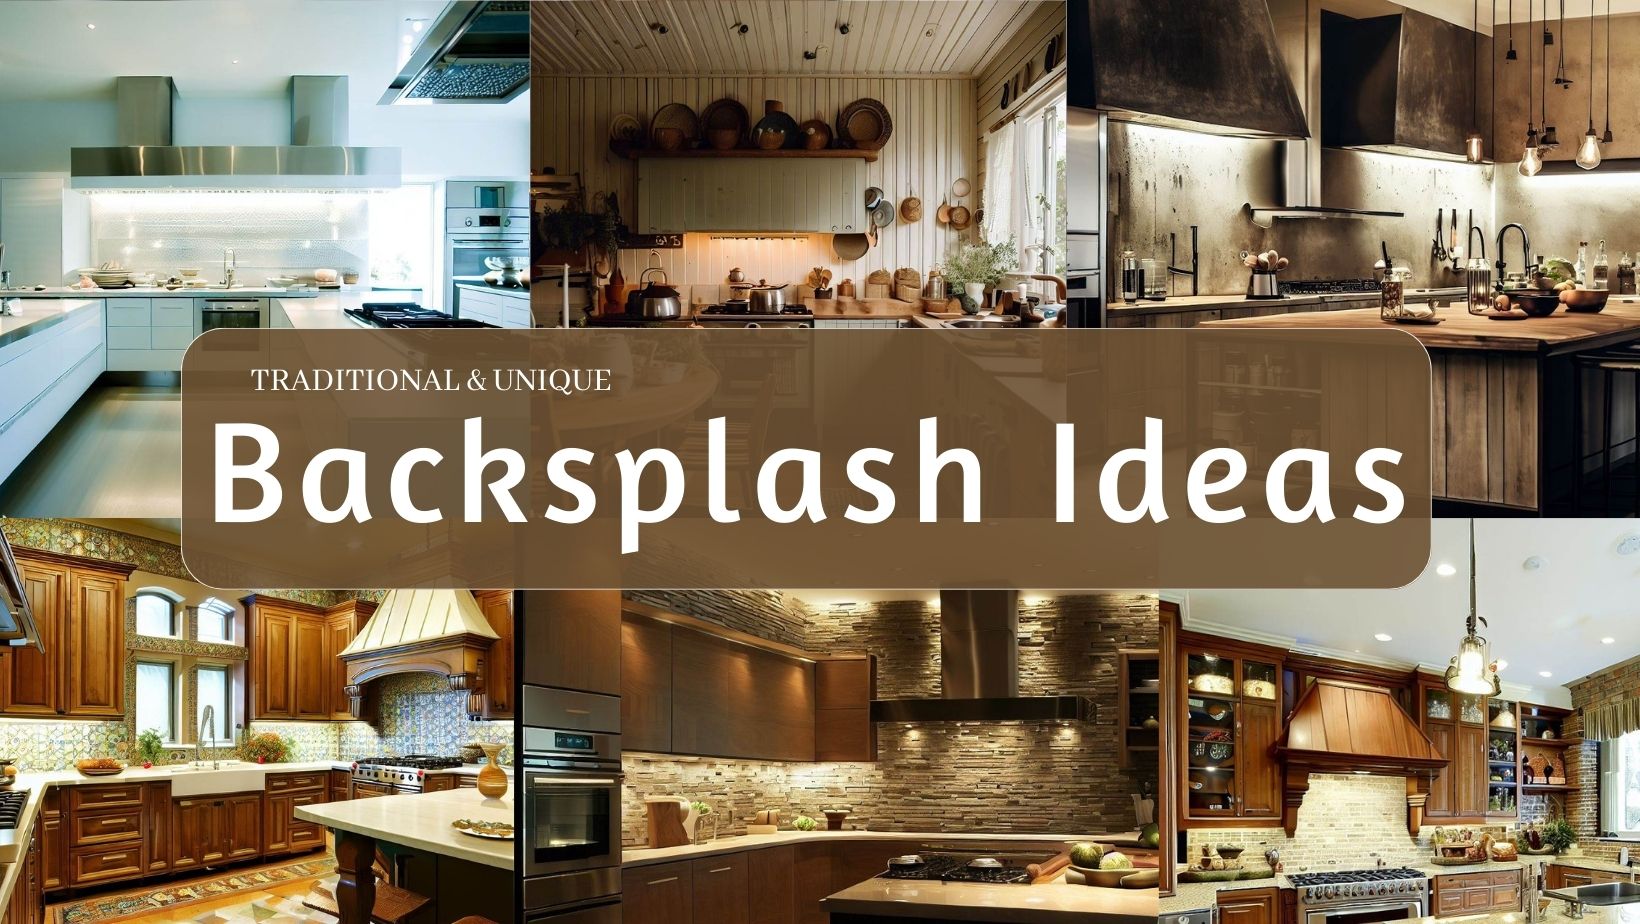 Kitchen Backsplash Ideas: Traditional & New Unique Ways